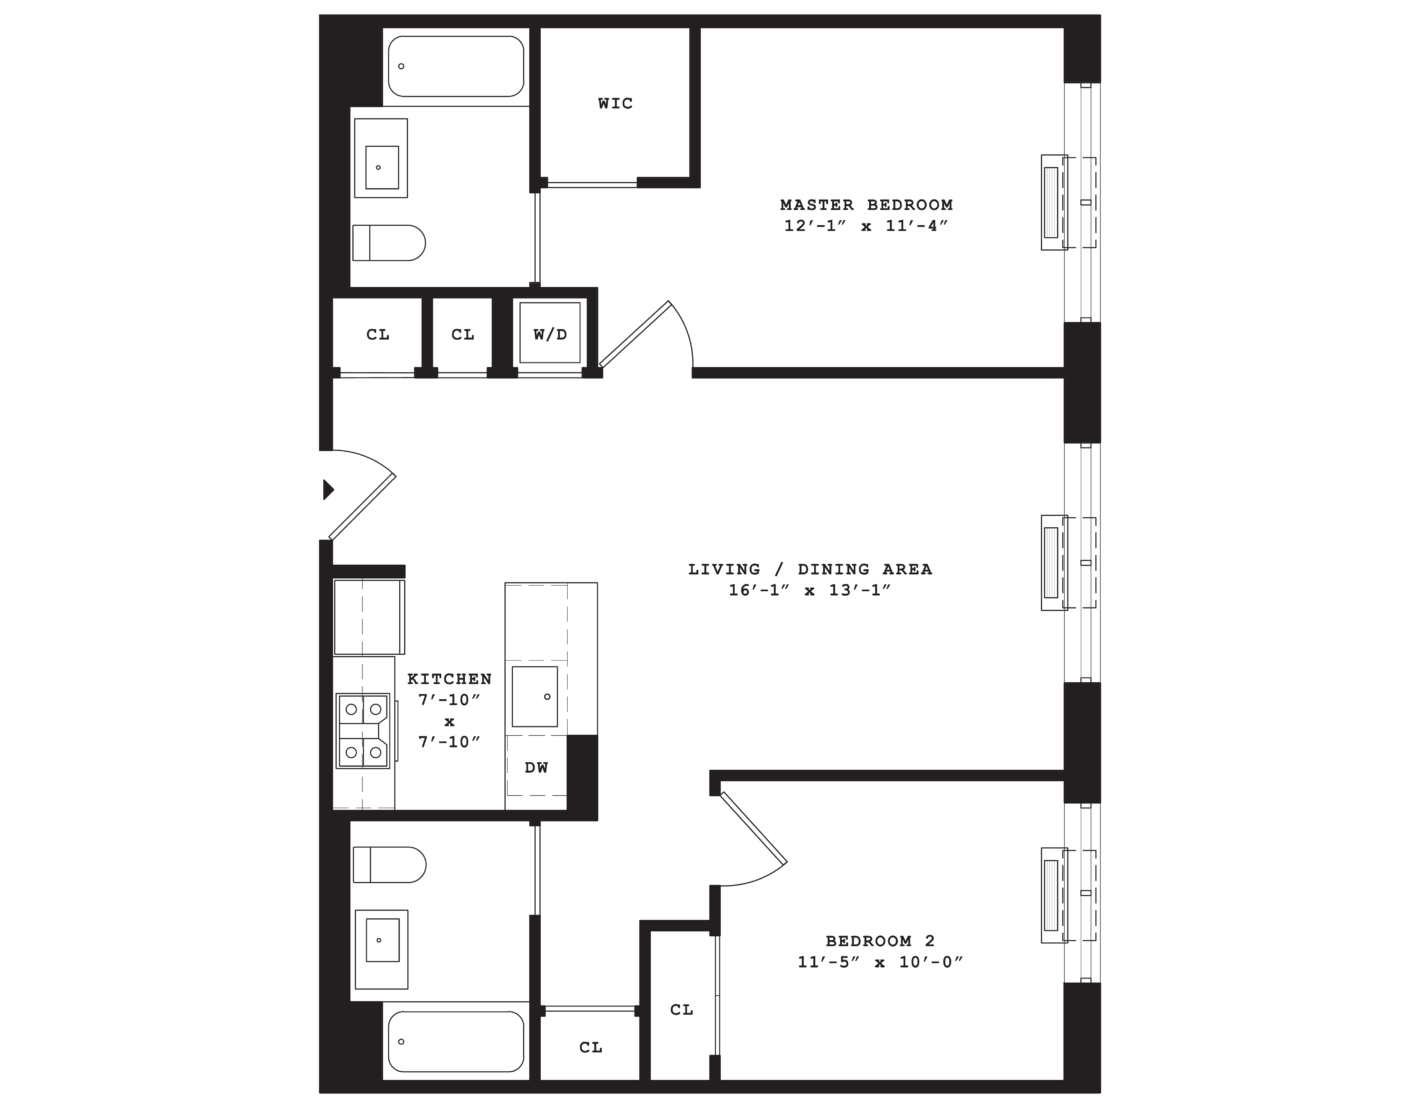 Eleven 33 2 bedroom 2 bathroom floorplan with spacious rooms